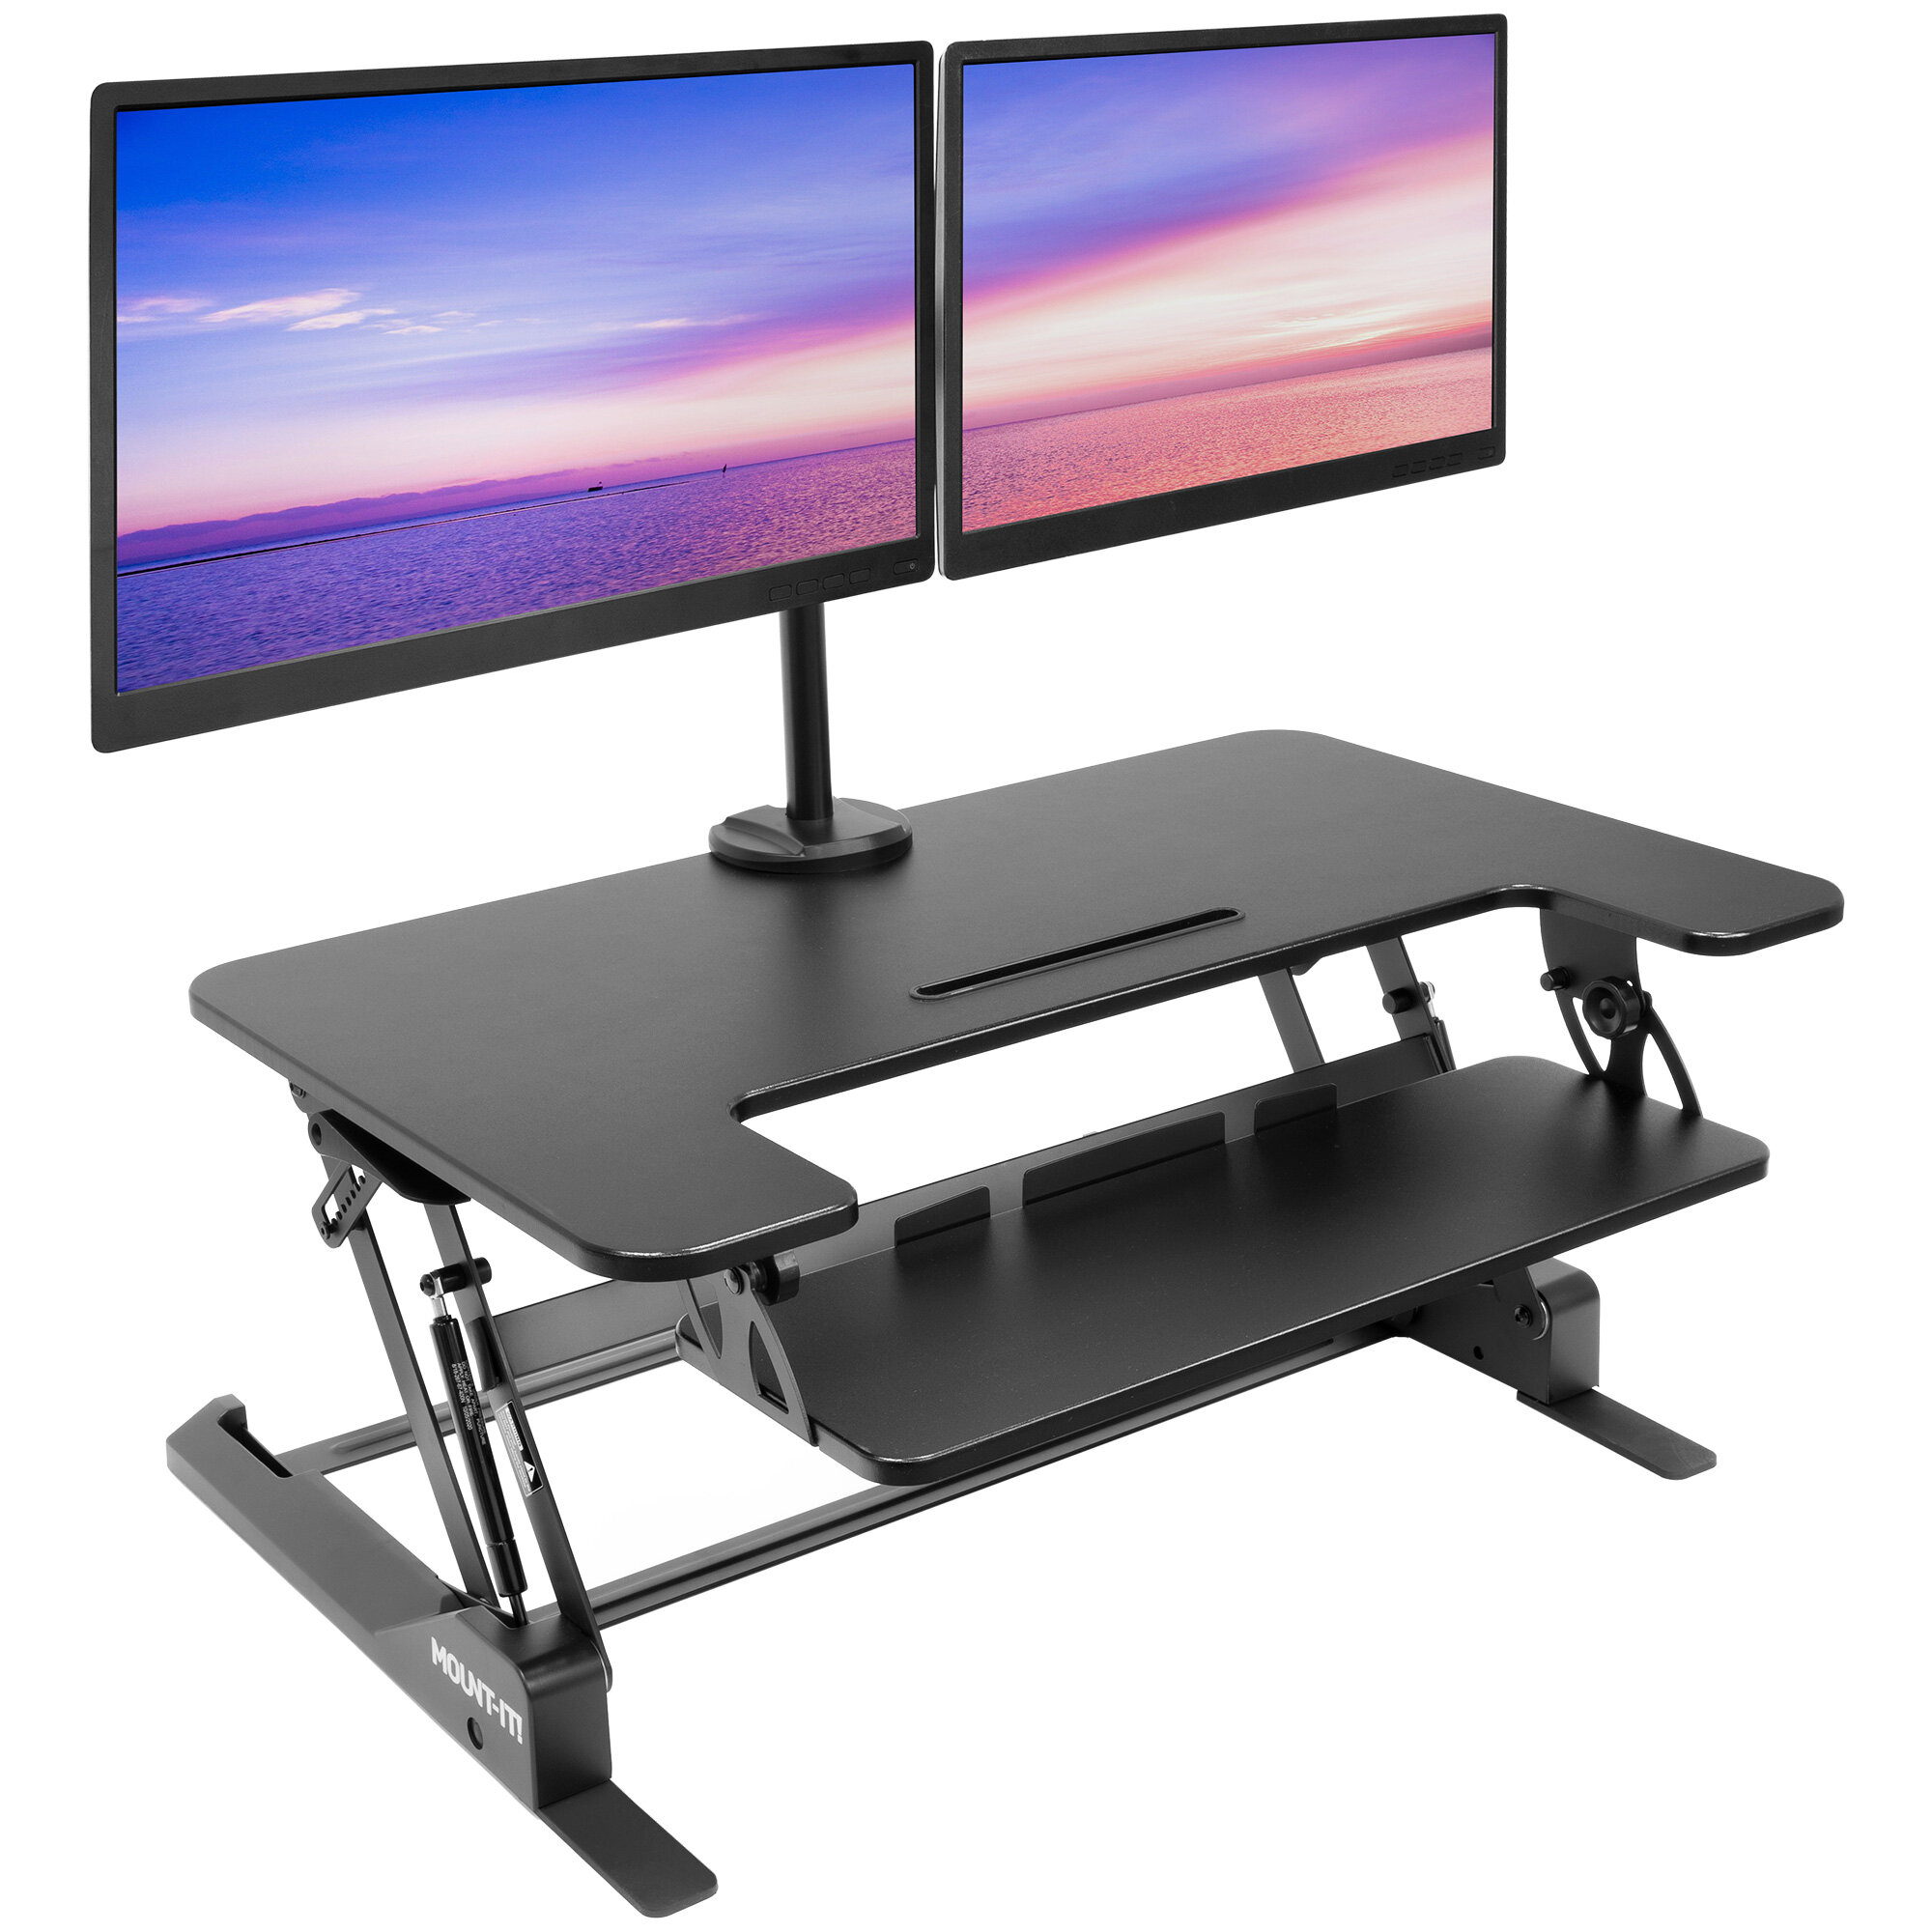 Ergonomic Desks - Sit-Stand Desks & Converters